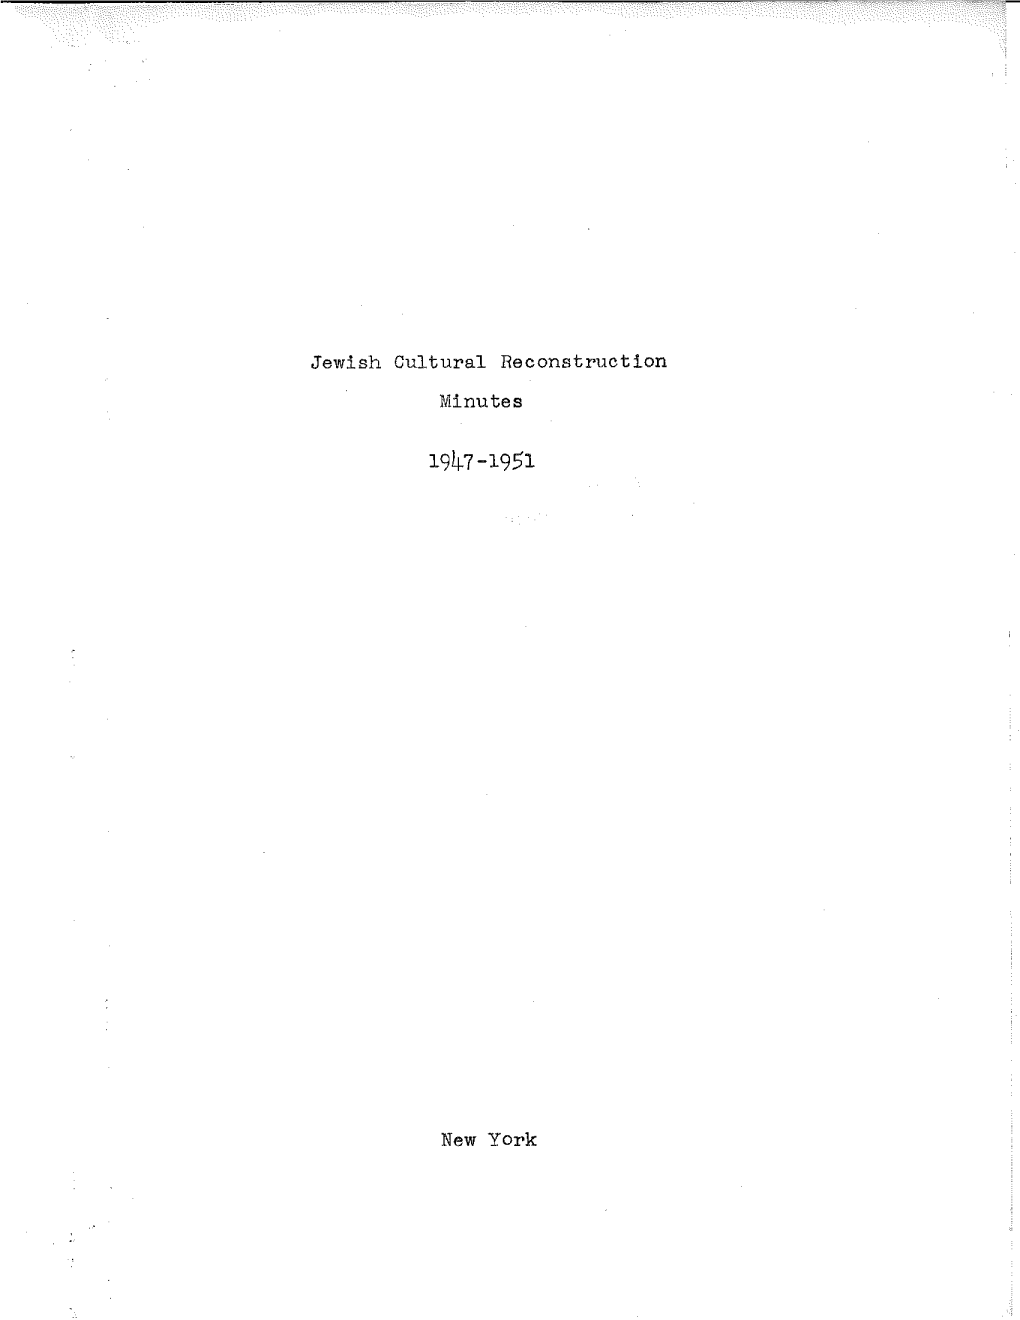 Jewish Cultural Reconstruction Minutes New York